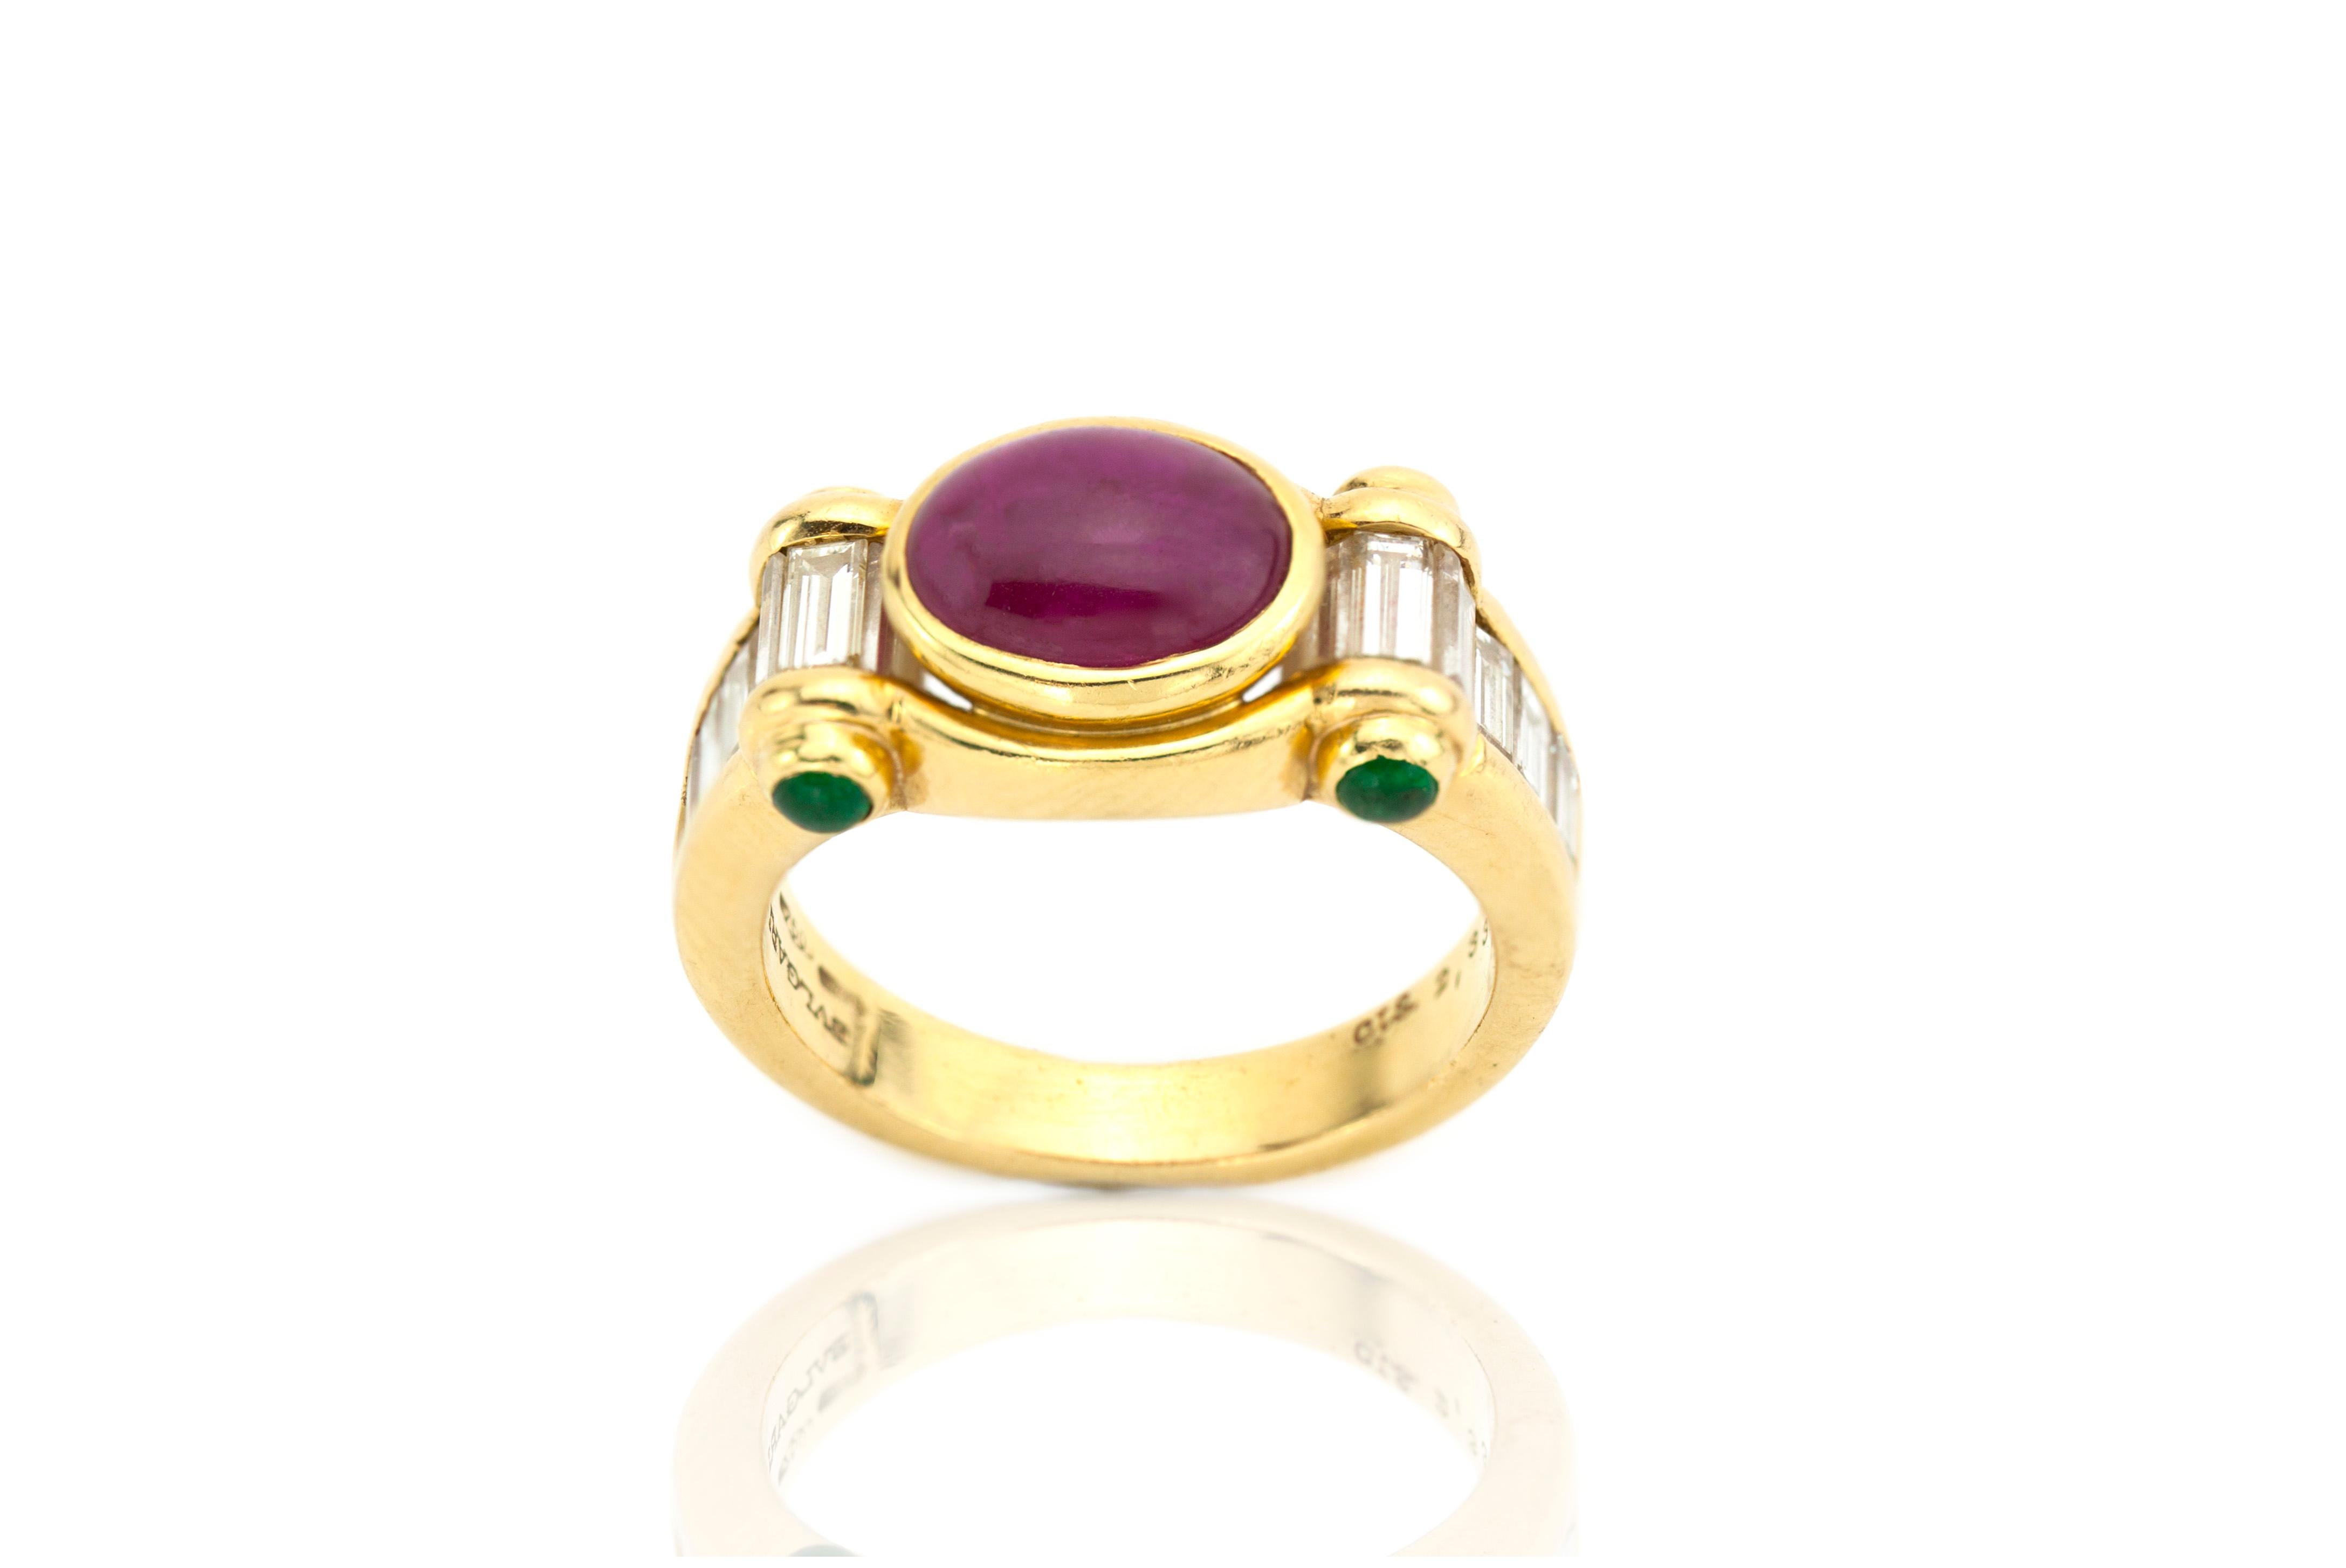 Bvlgari Cabochon Burma Ruby & Diamond Ring
Designer : Bvlgari
Made in : Italy Circa.1970's
Fully hallmarked

Dimensions - 
(UK) = JK
(US) = 5 1/2
(EU) = 50 1/4
Size : 2.4 x 2 x 0.85 cm
Weight : 8 grams

Cabochon Burma Ruby - 
Cut : Oval
Size : 2.33